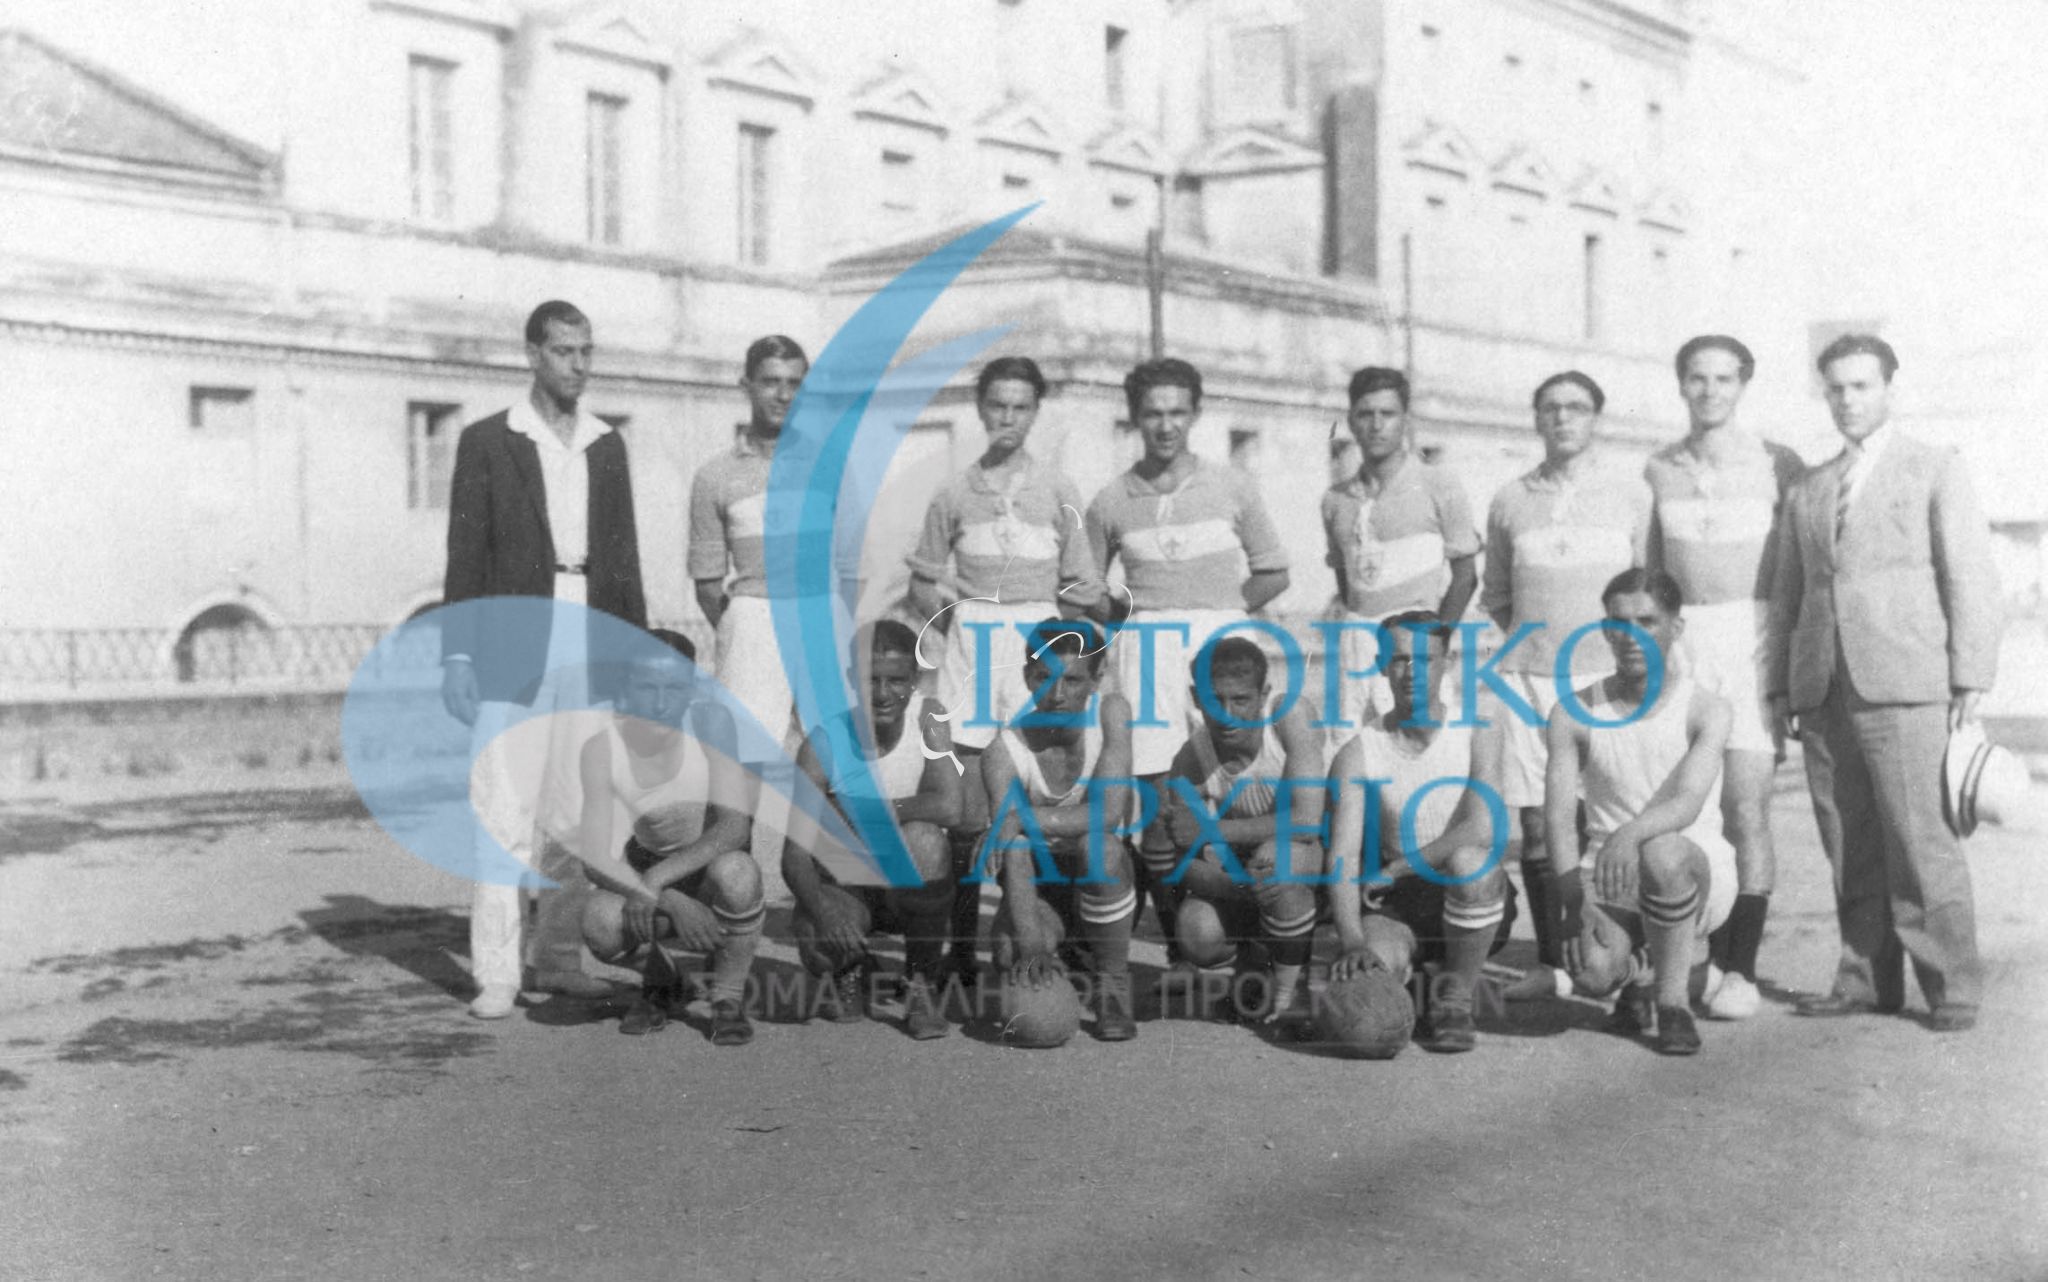 H 2η Ομάδα Προσκόπων Κερκύρας σε αγώνες πετόσφαιρας το 1930